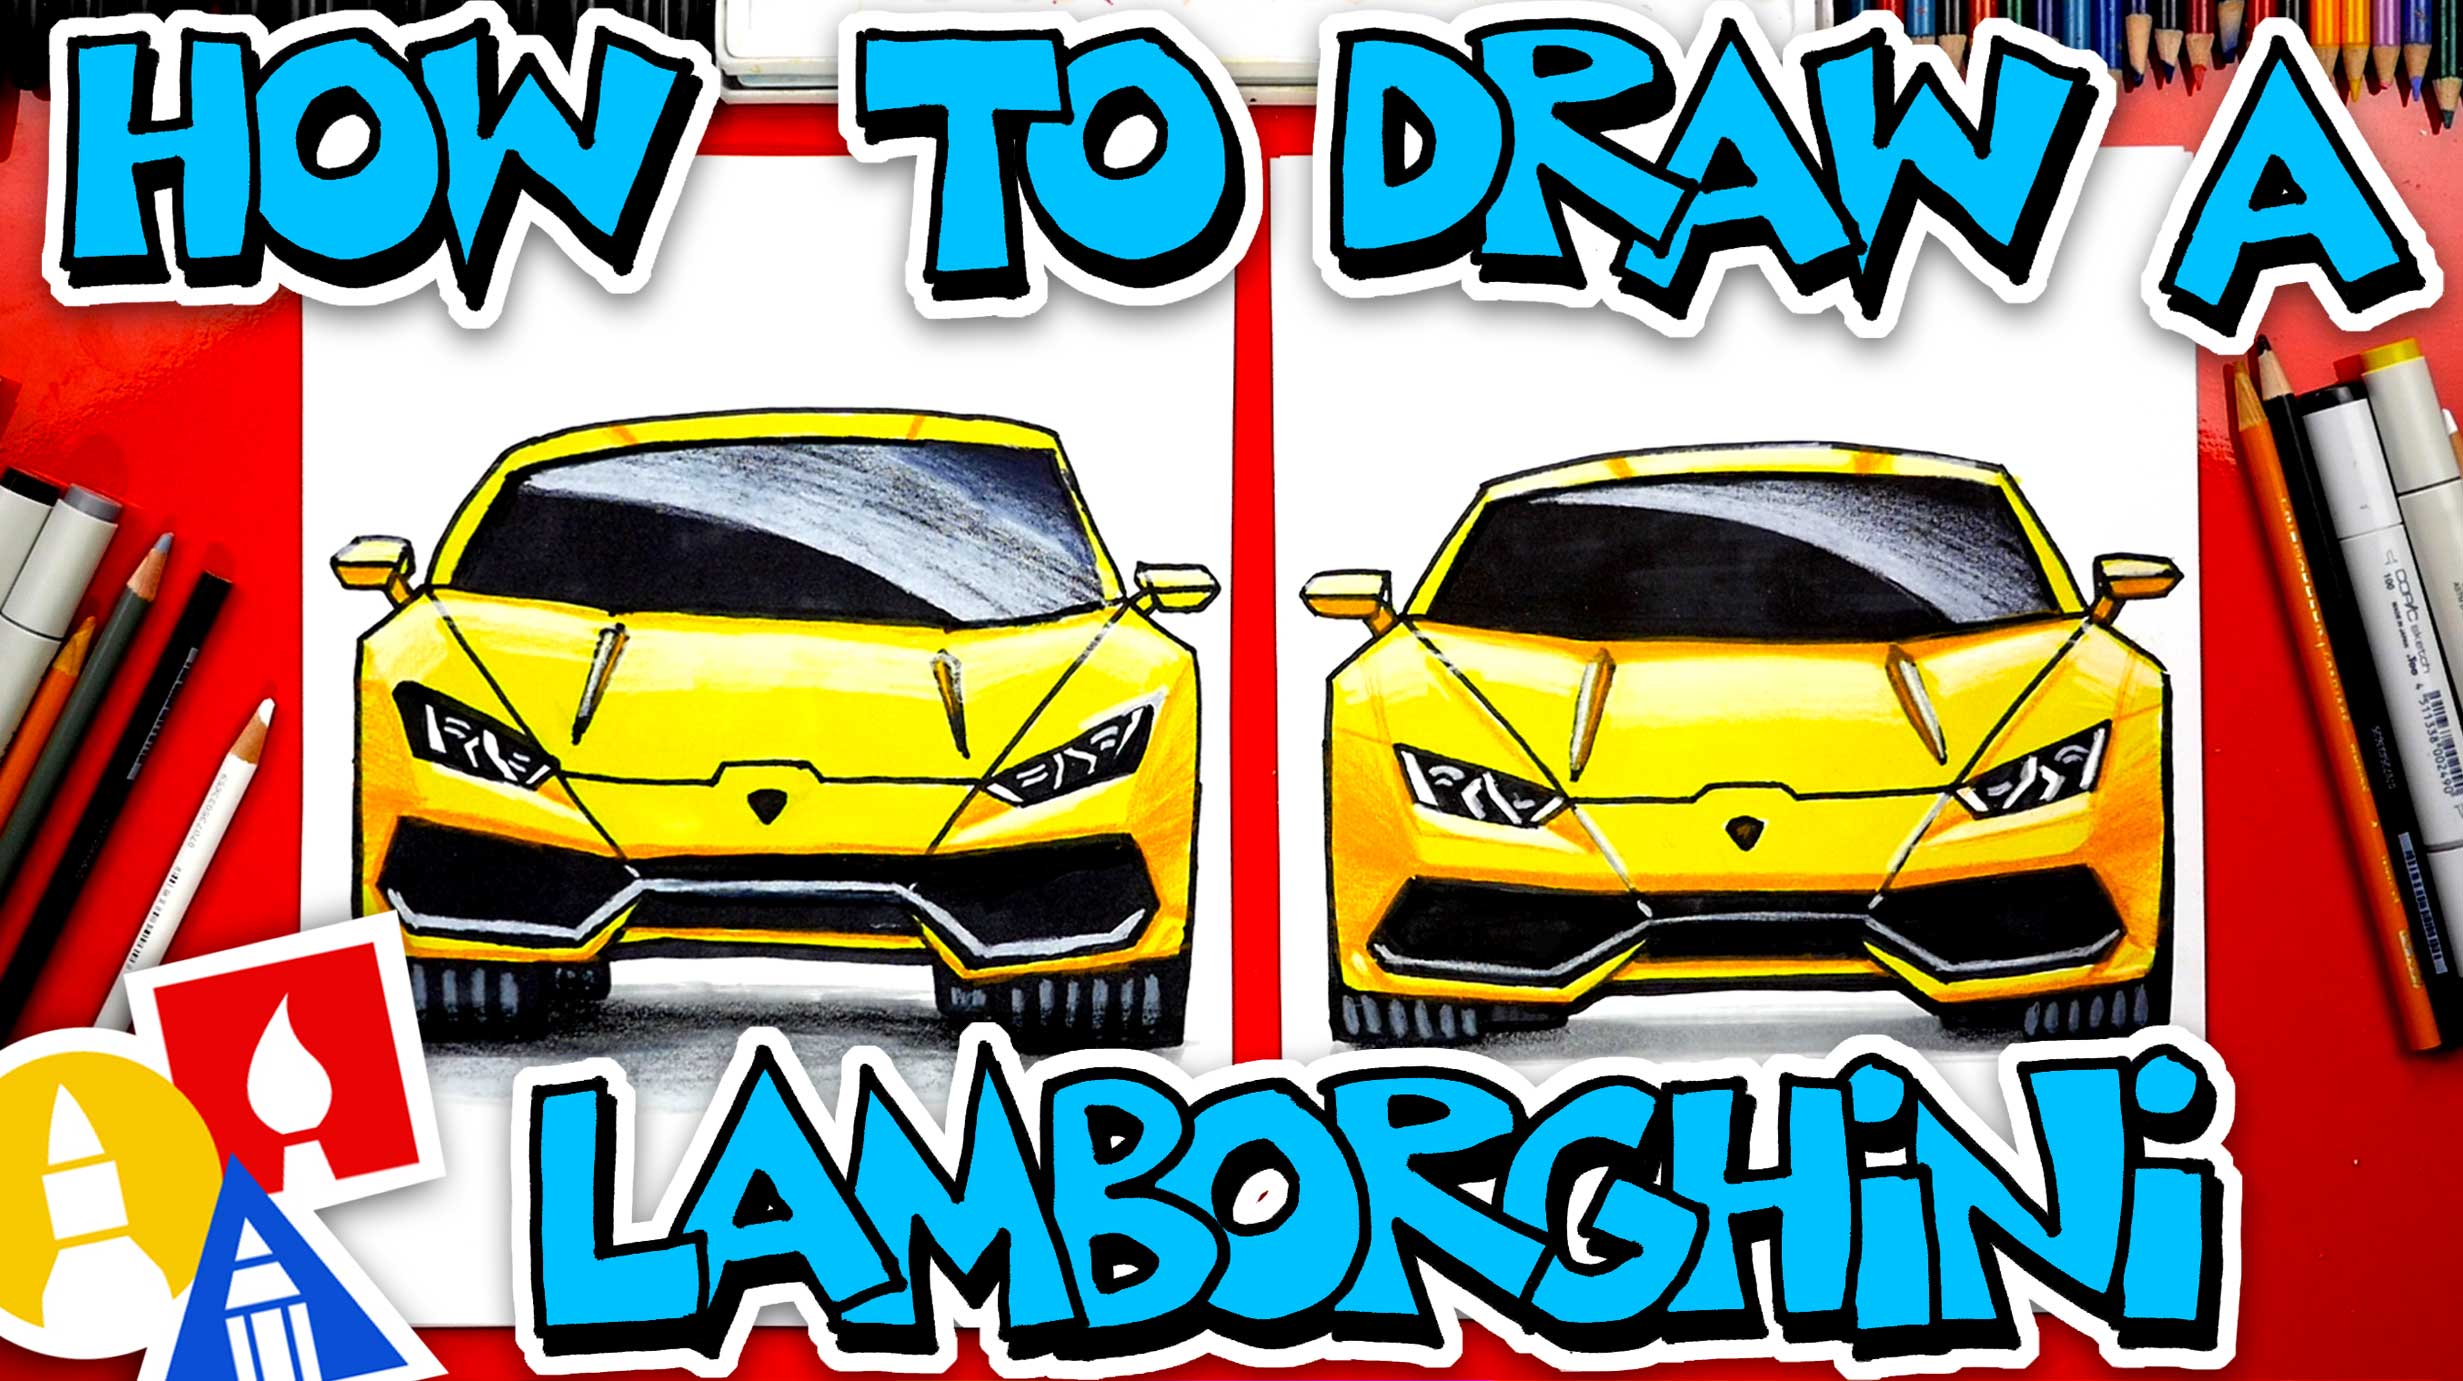 Lamborghini drawing vectors free download 100,546 editable .ai .eps .svg  .cdr files